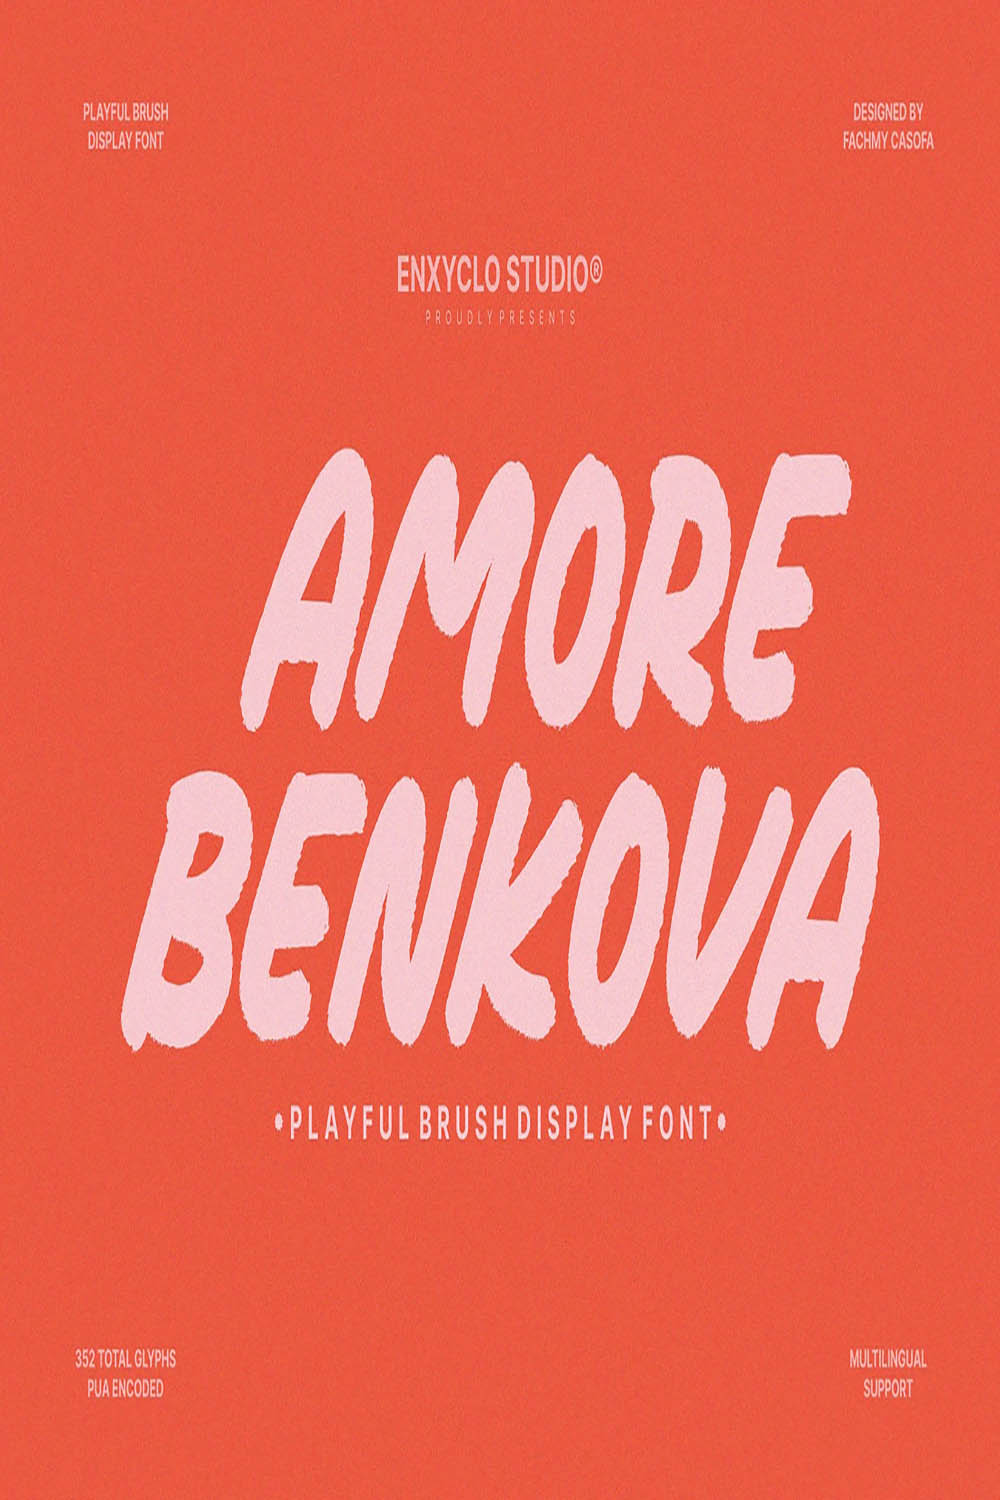 NCL AMORE BENKOVA - PLAYFUL BRUSH DISPLAY FONT pinterest preview image.